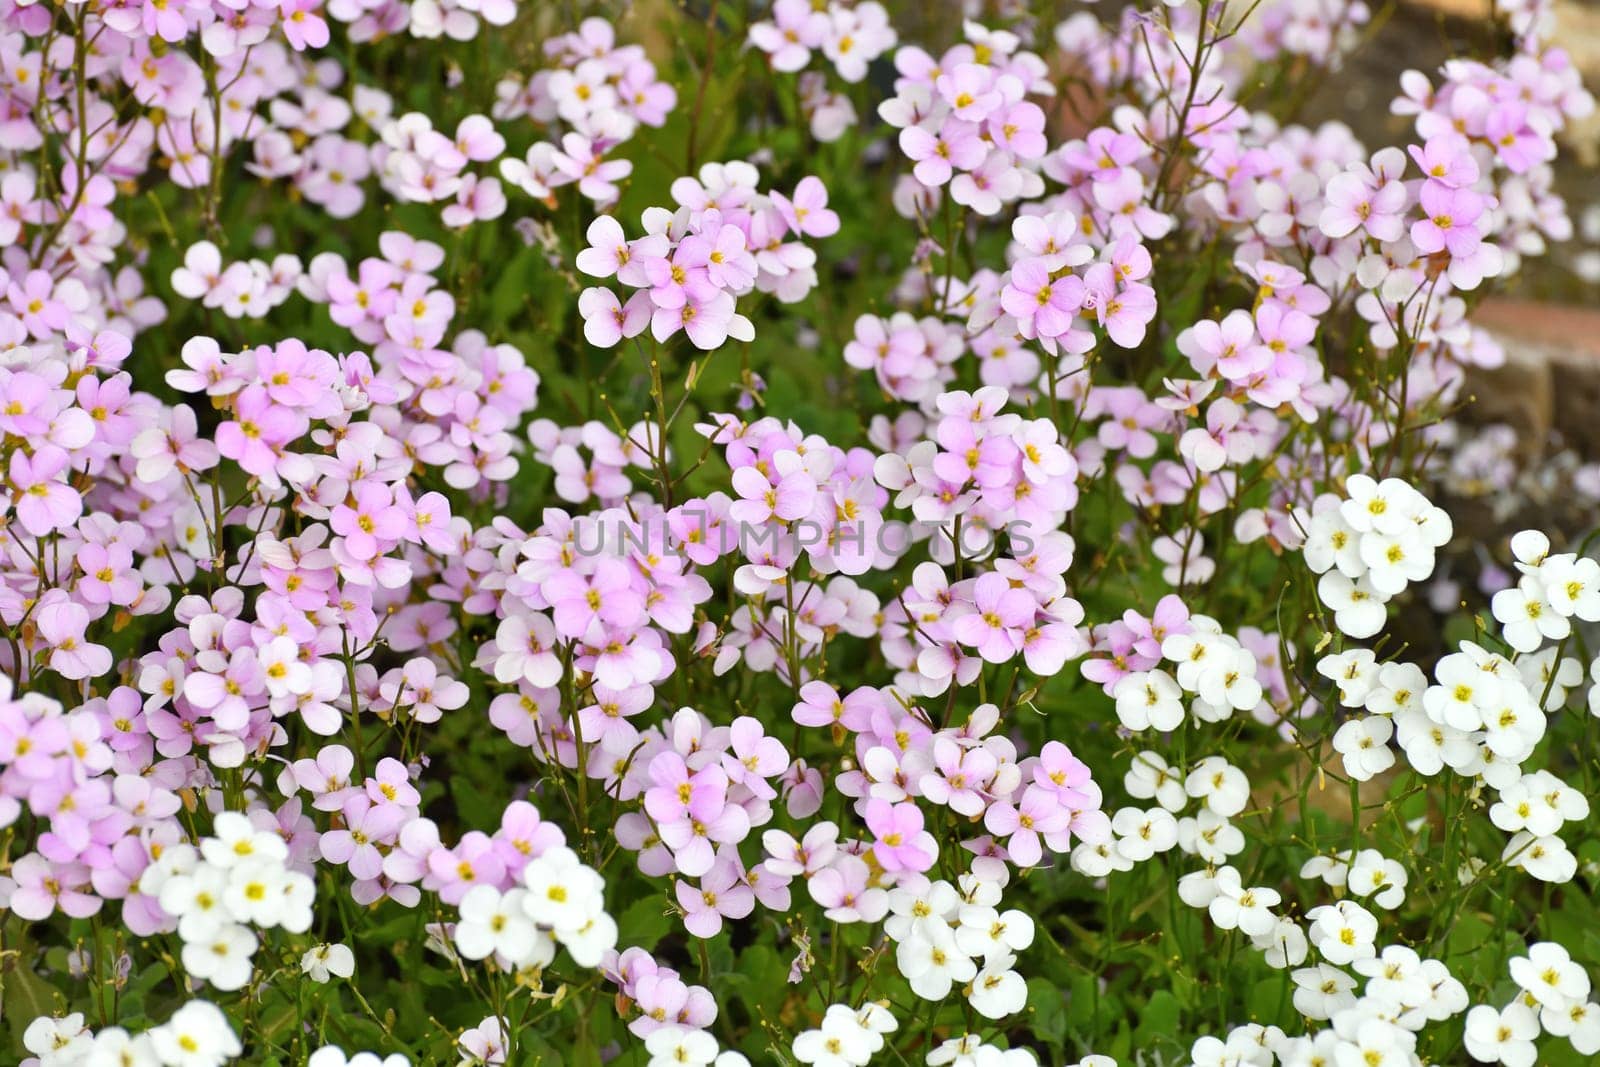 Arabis - an early spring flower, primrose by olgavolodina